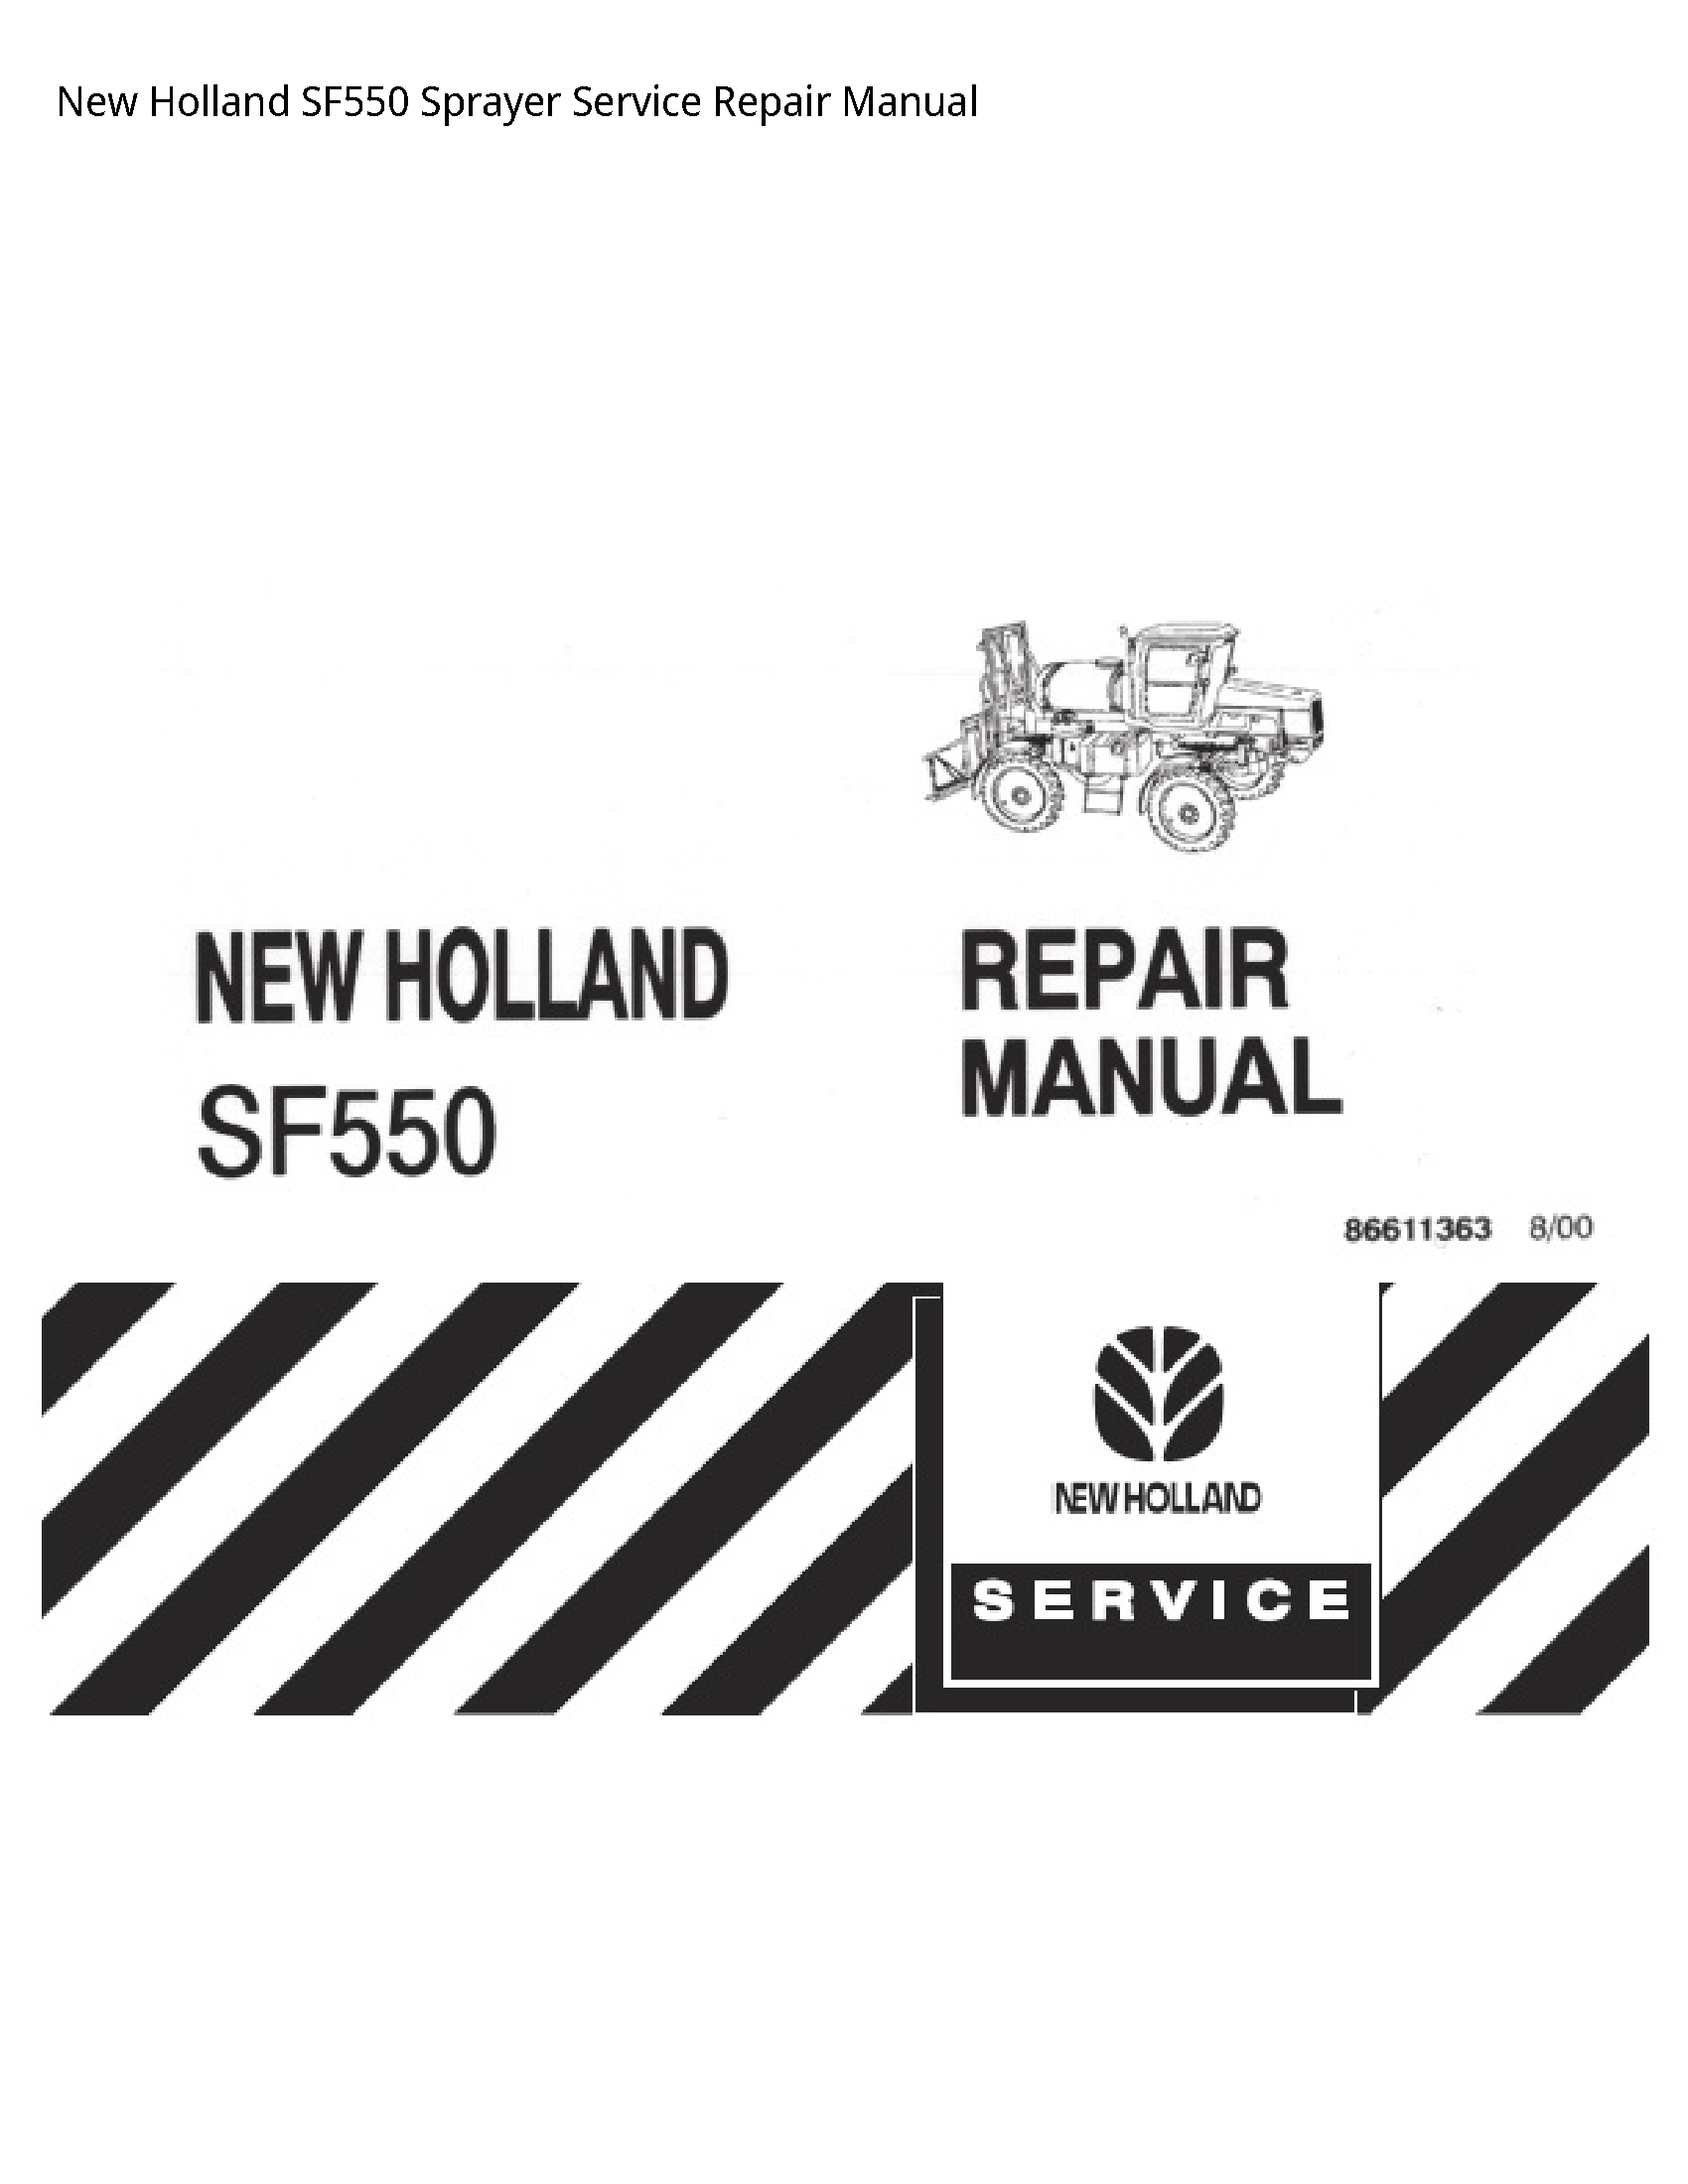 New Holland SF550 Sprayer manual